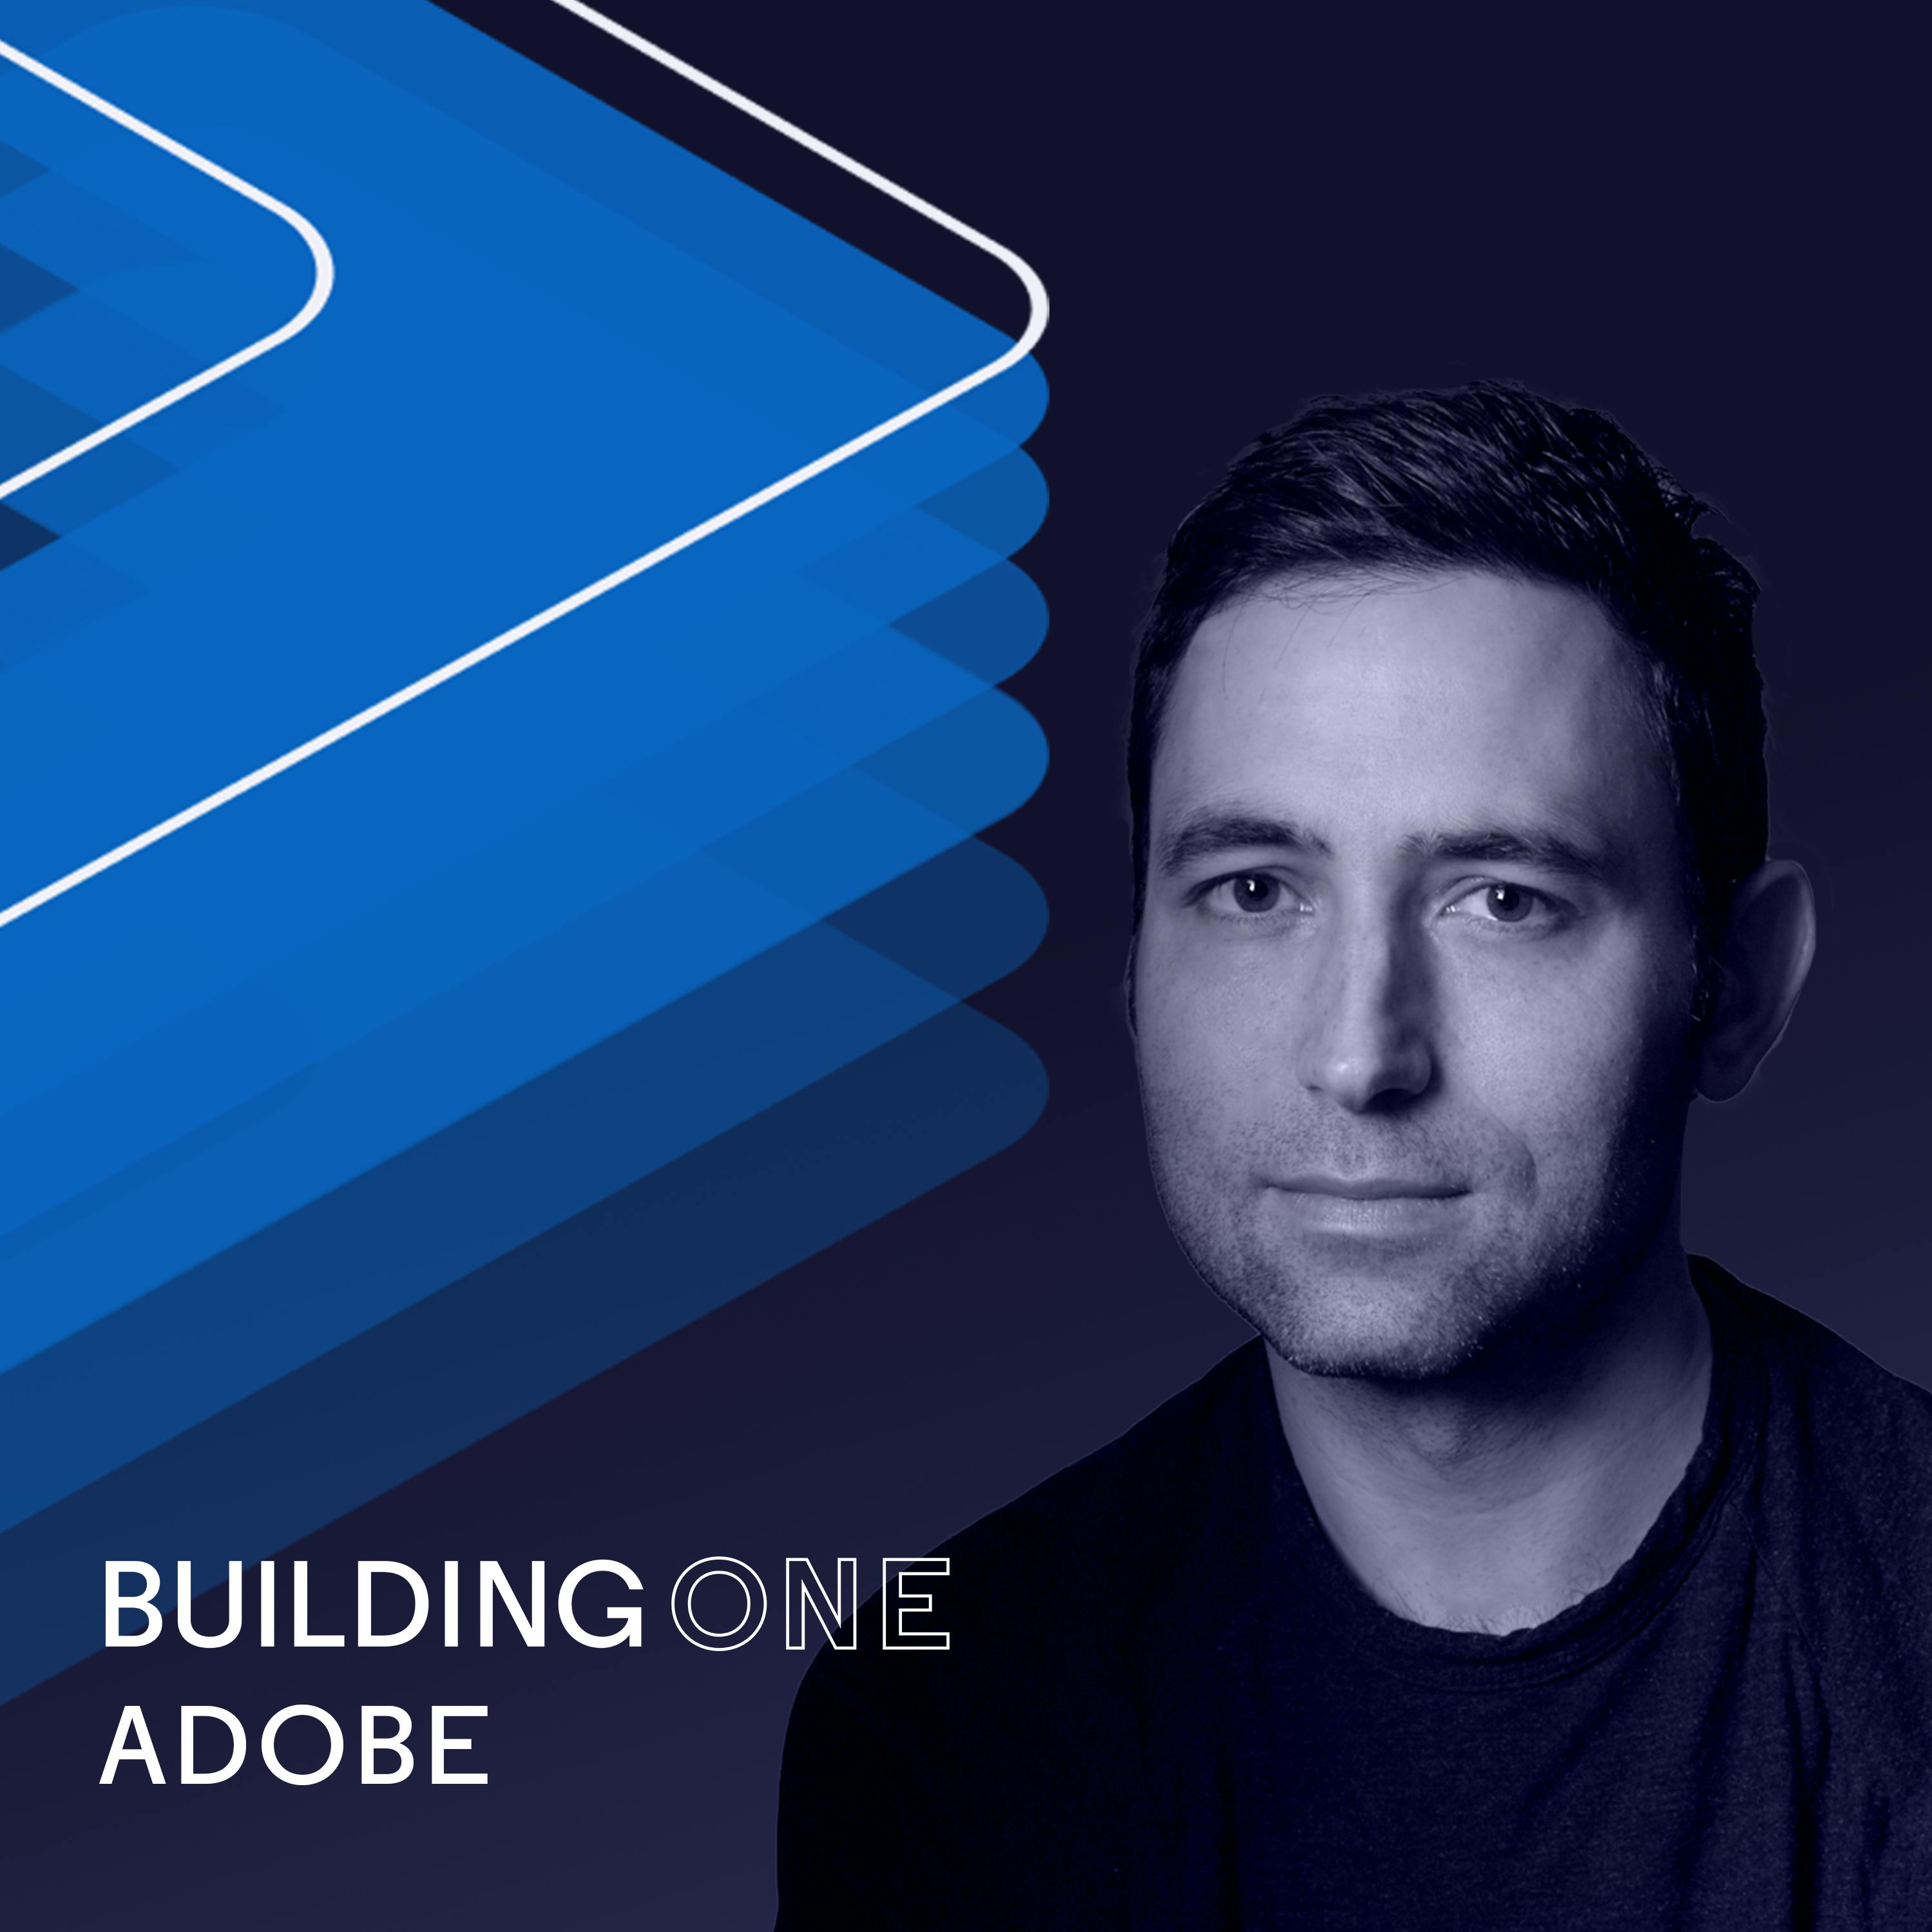 Building Adobe with Scott Belsky